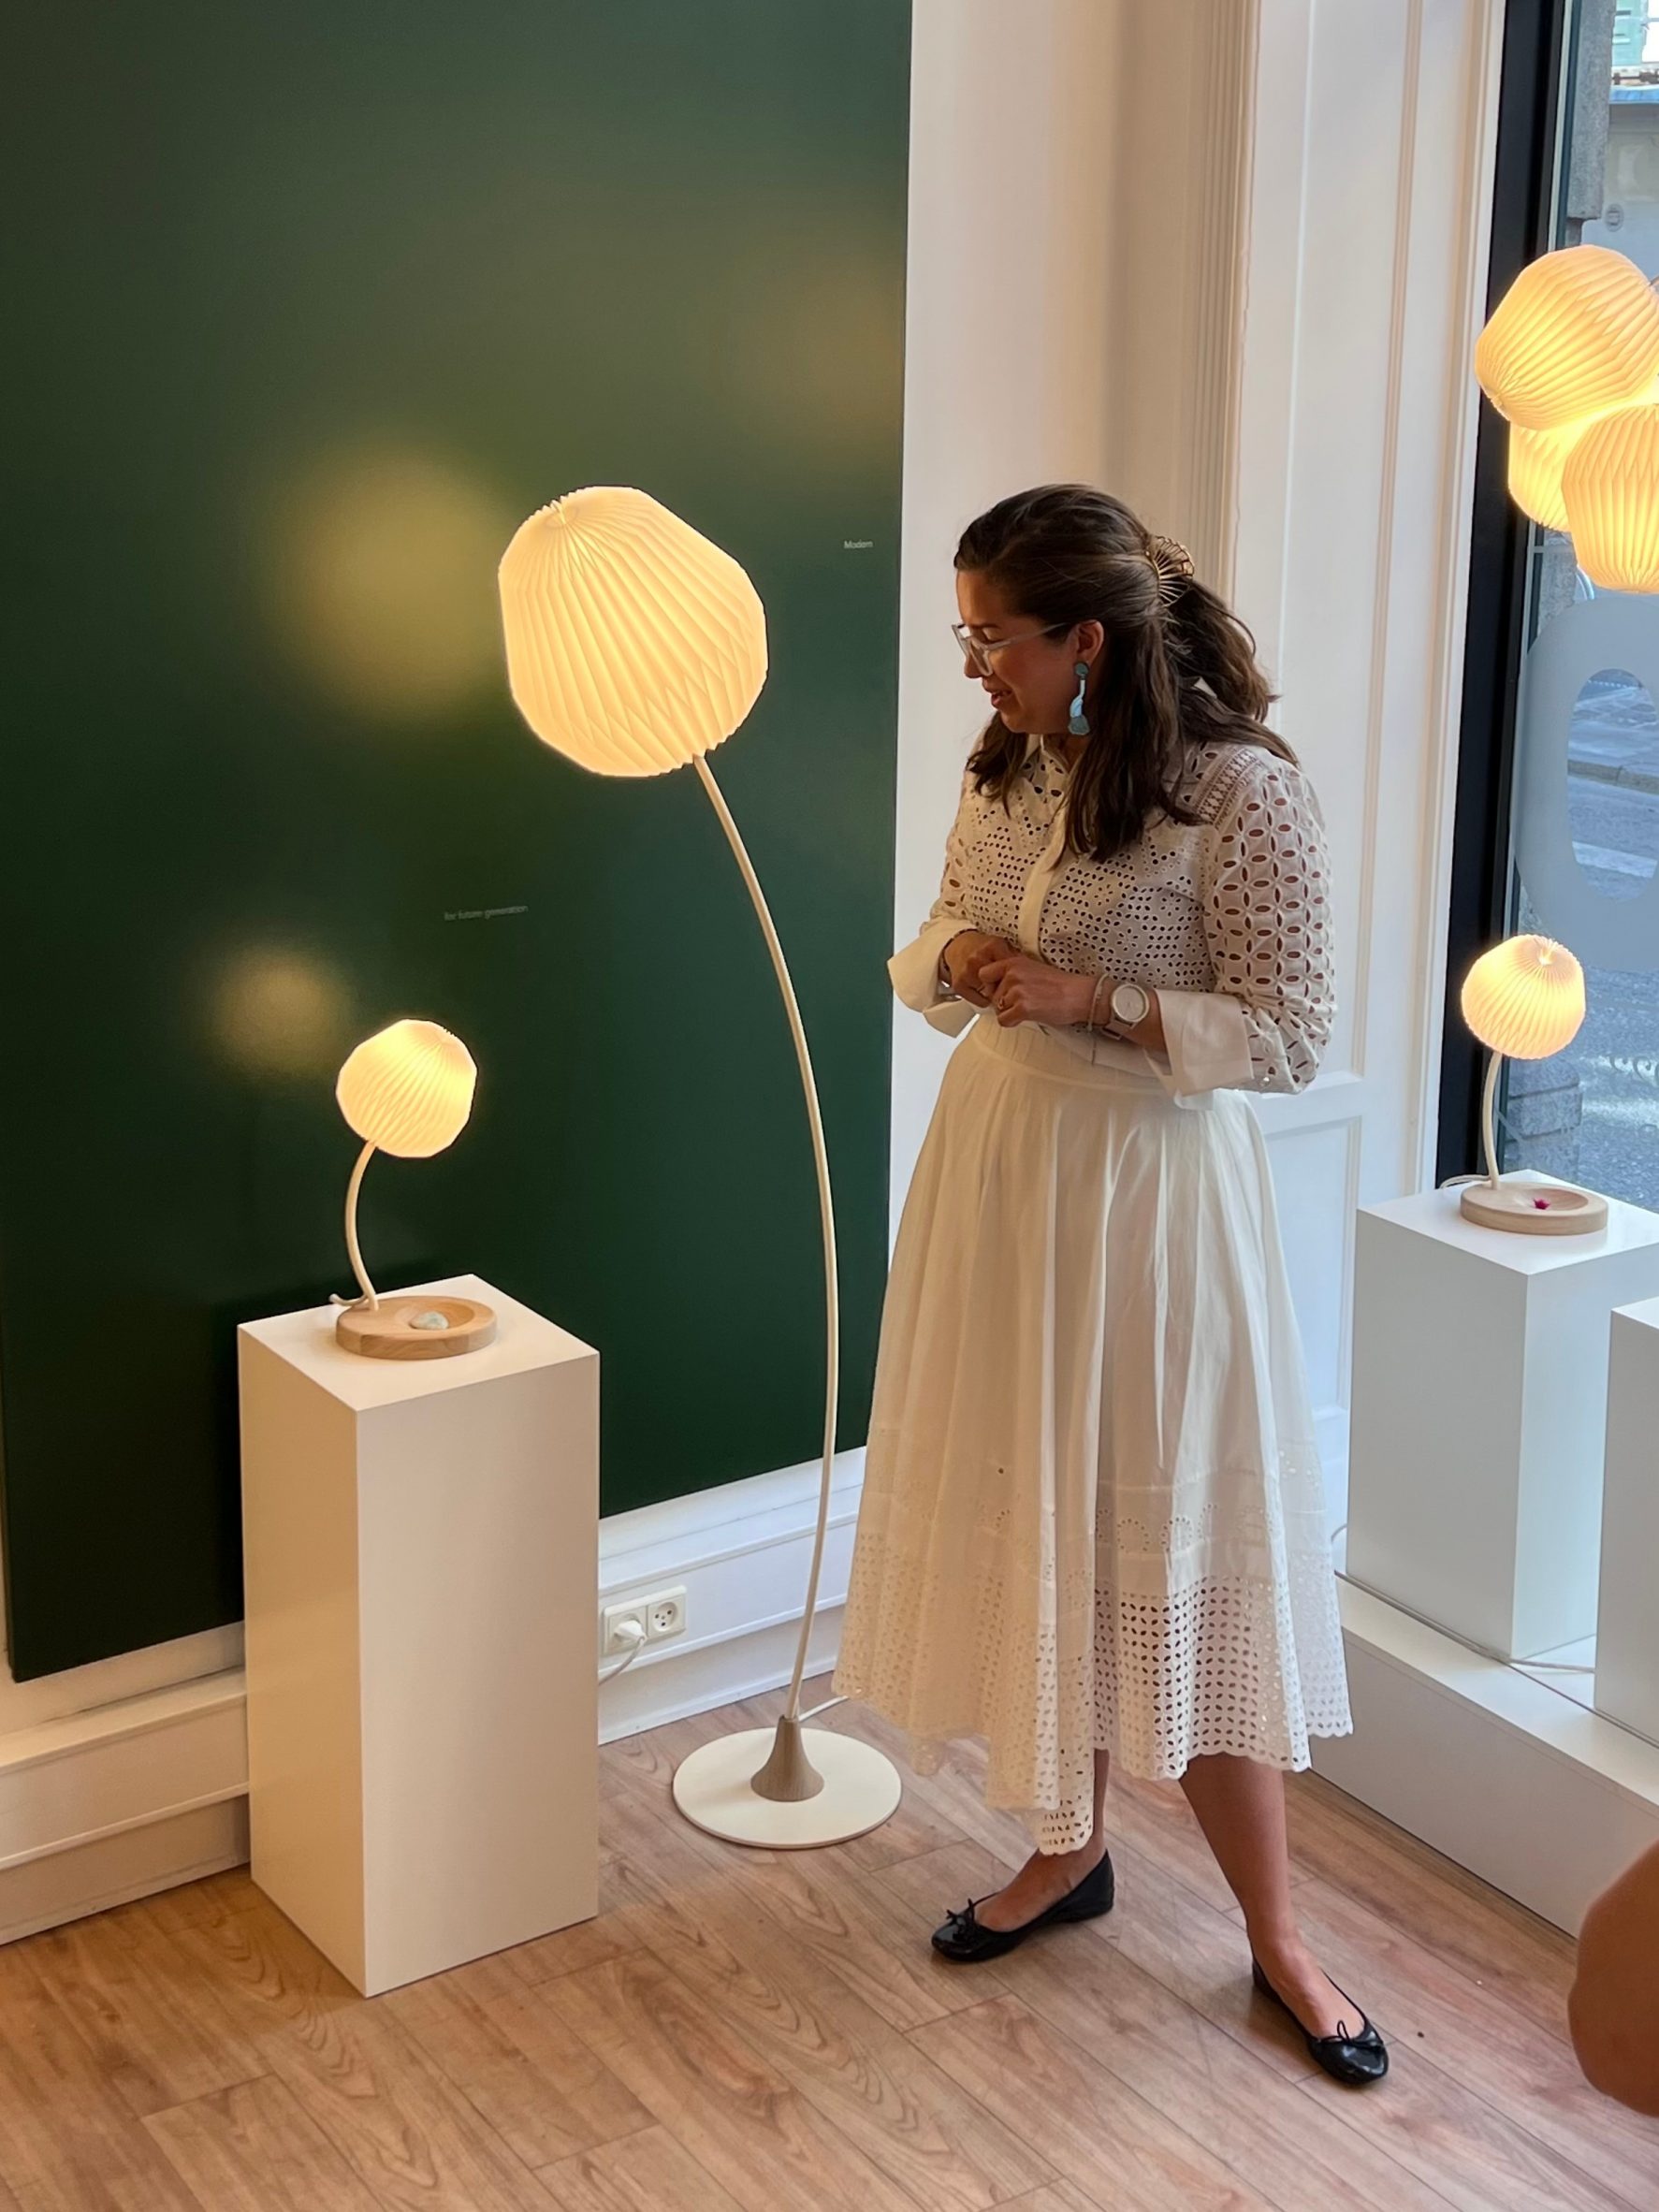 Sinja Svarrer Damkjær unveils her new lamp collection for Le Klint